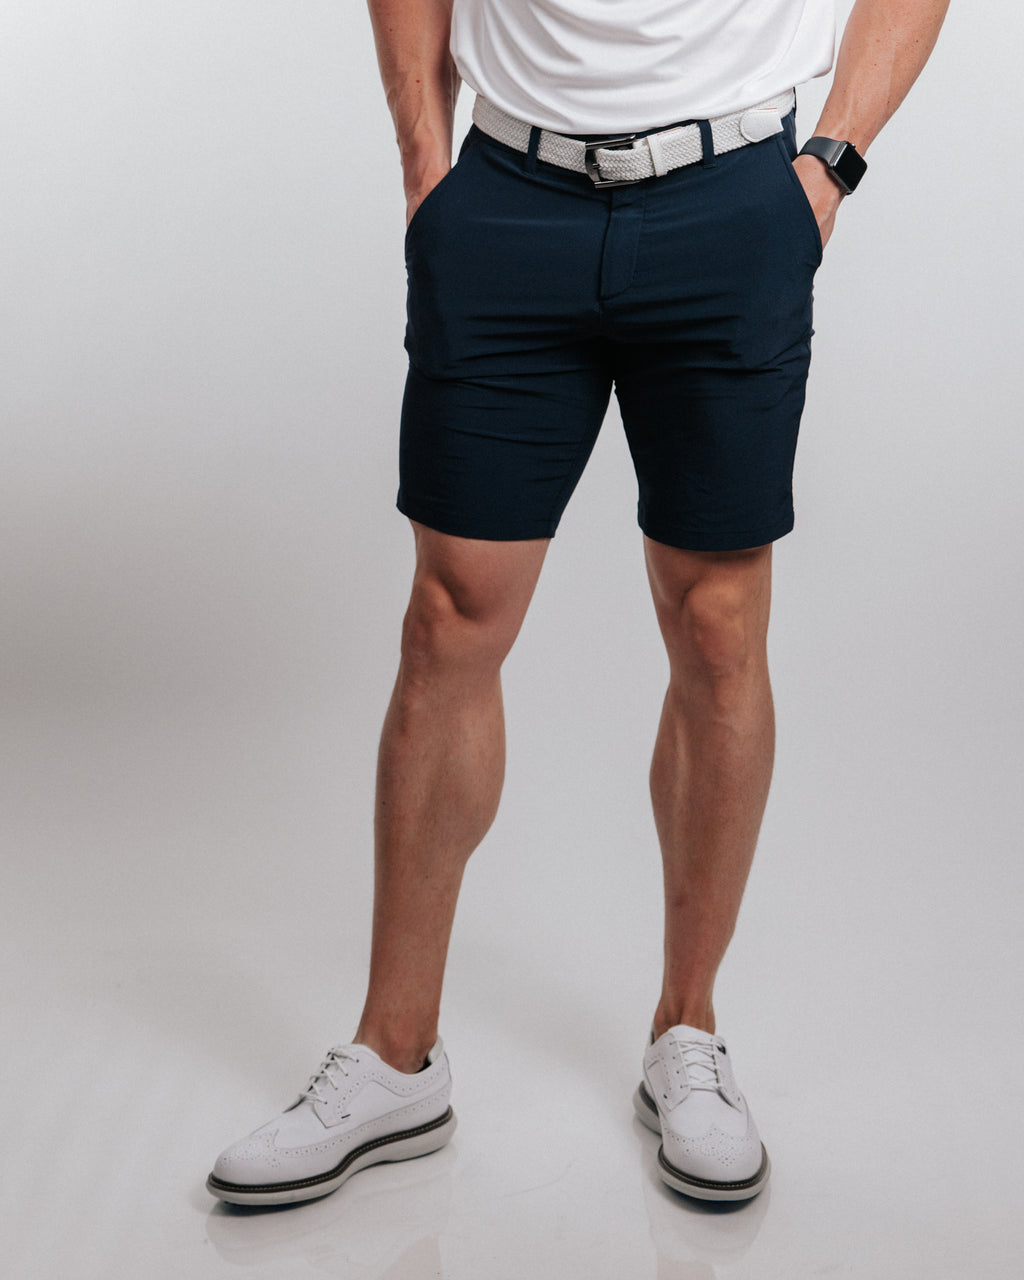 Primo Navy Blue Shorts - 7